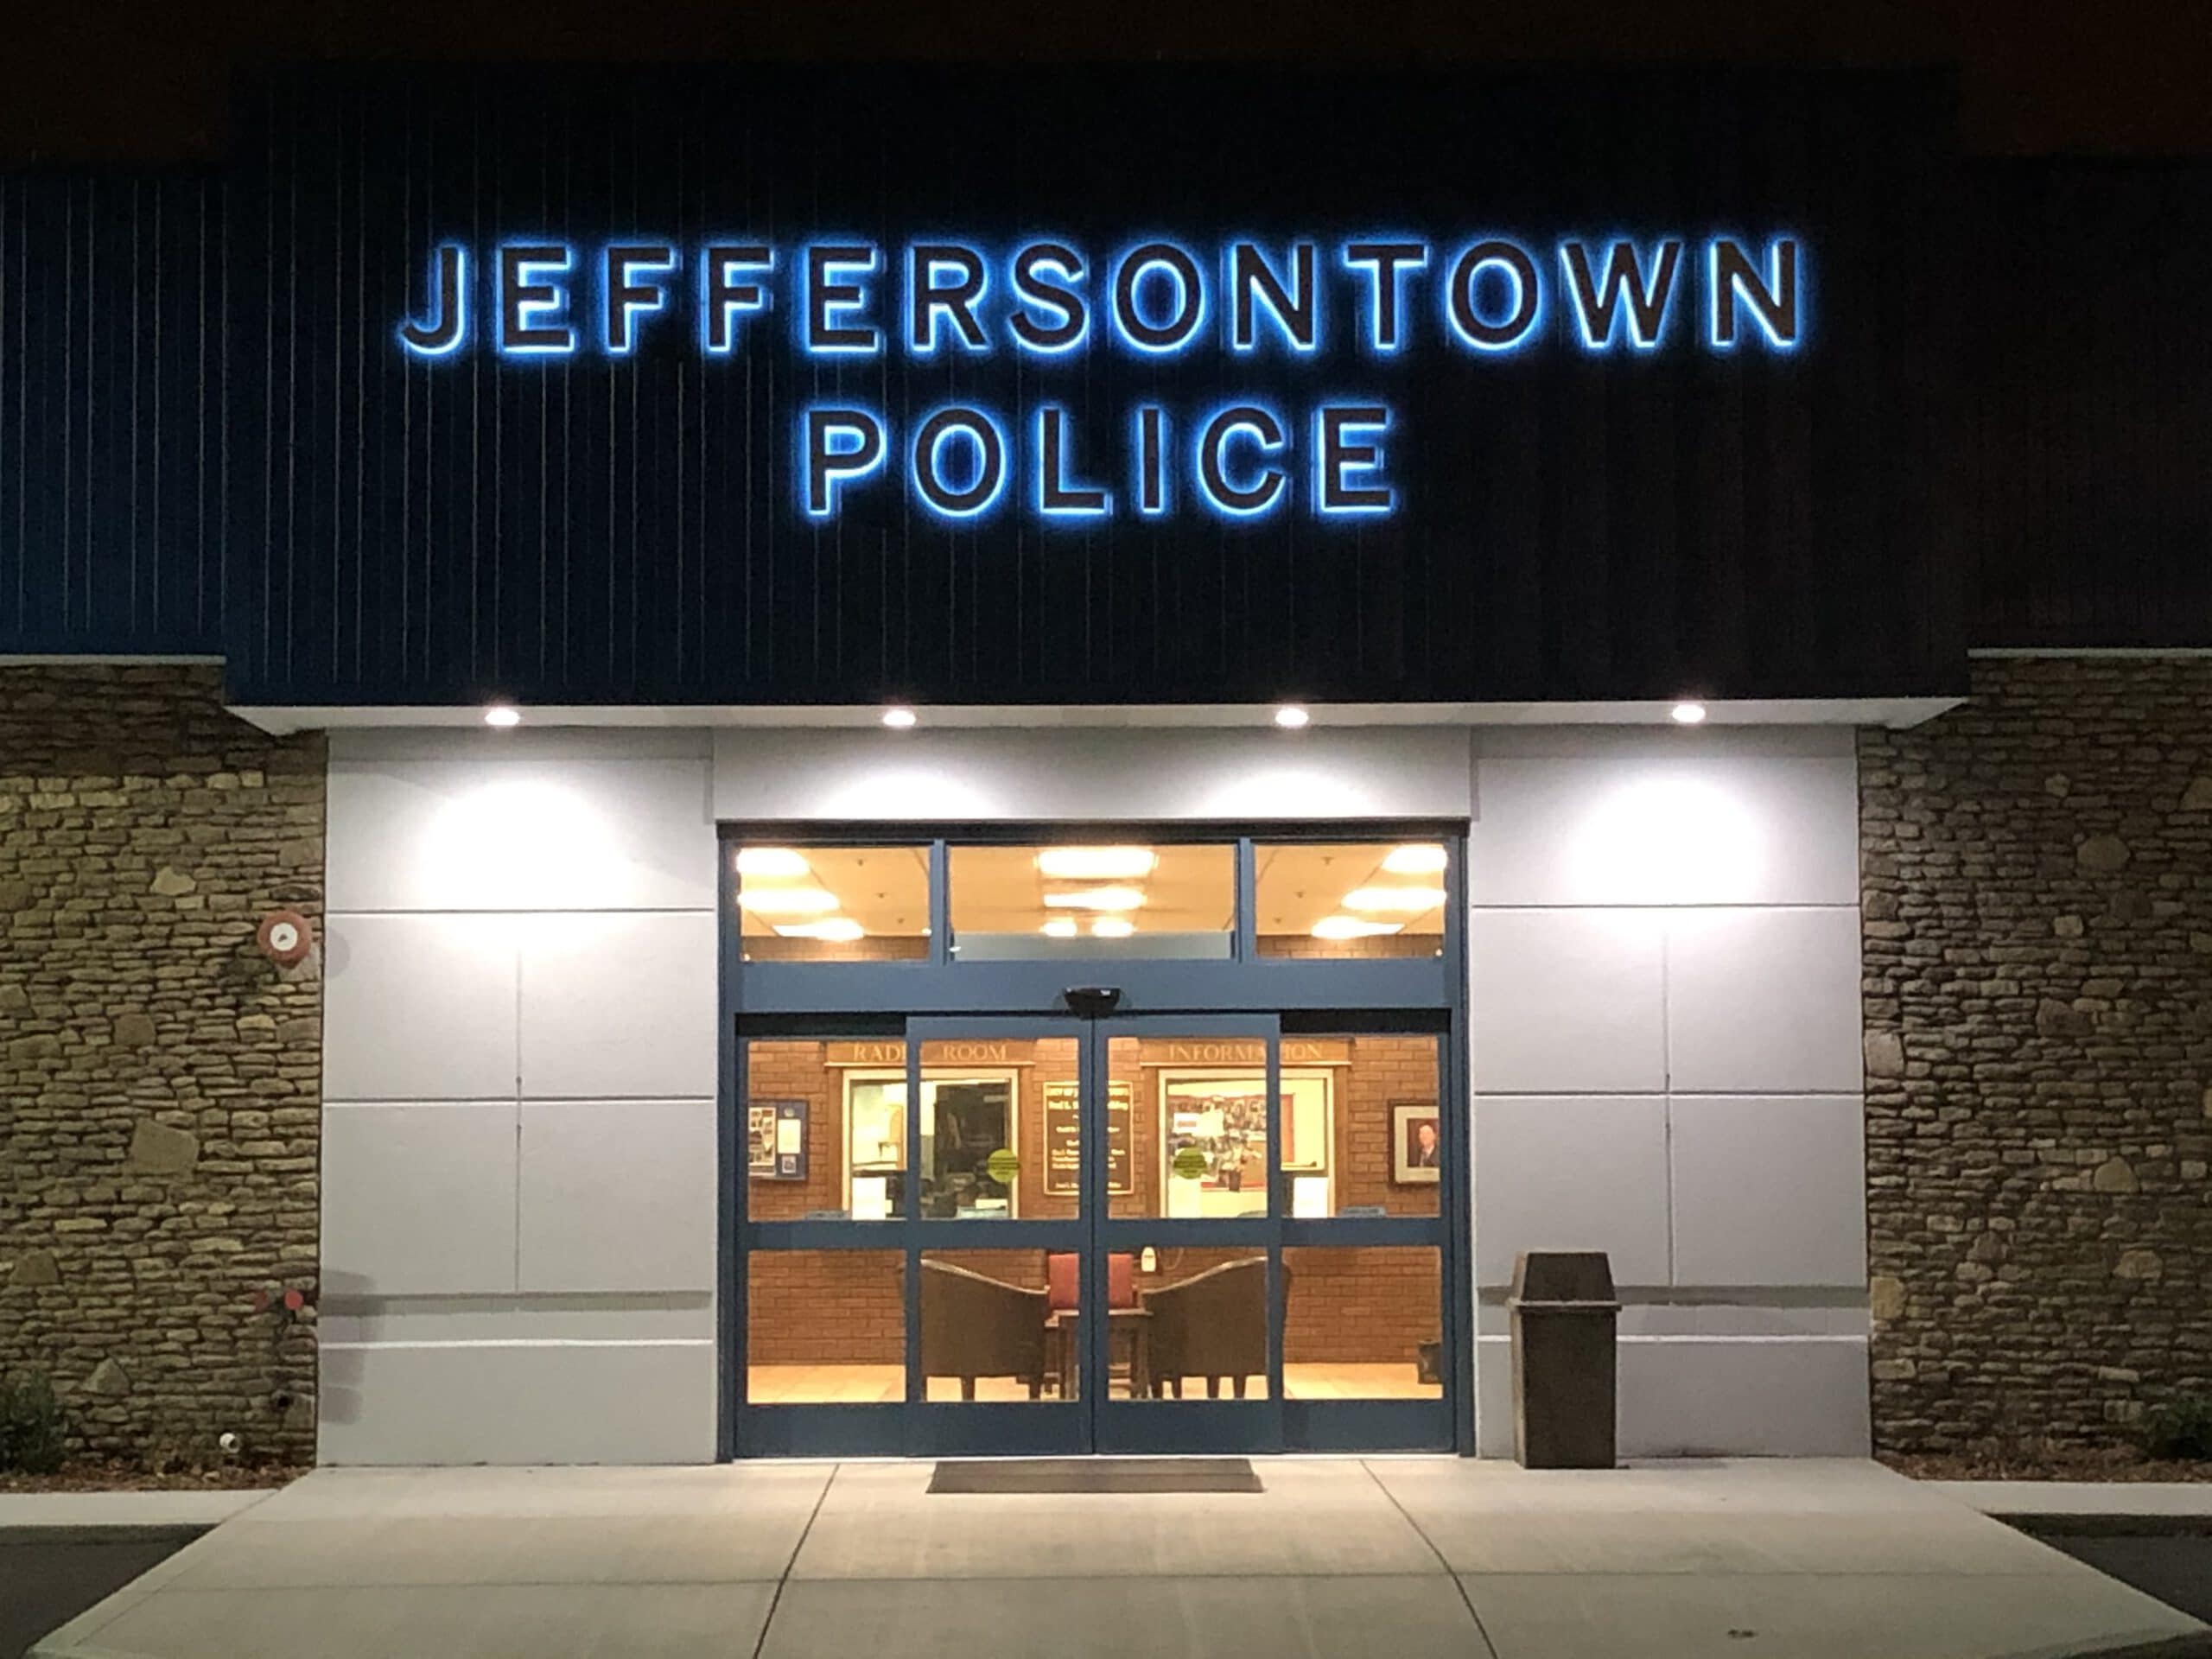 Jeffersontown Police Channel Letter Sign